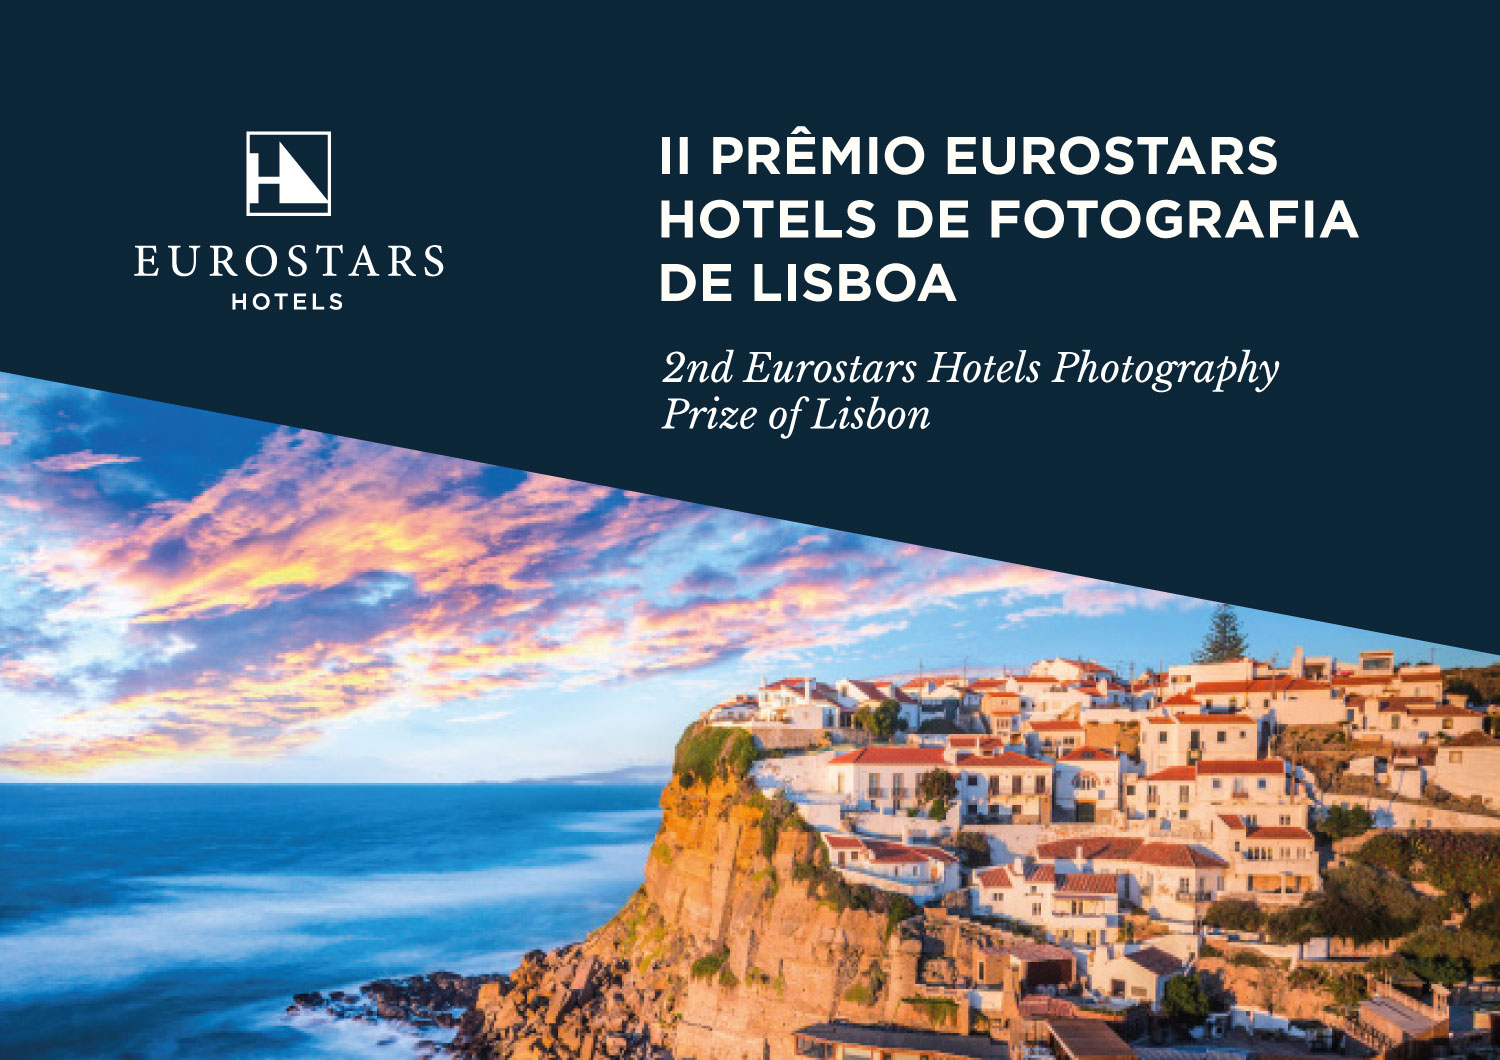 II Premio Eurostars Hotels de Fotografía de Lisboa